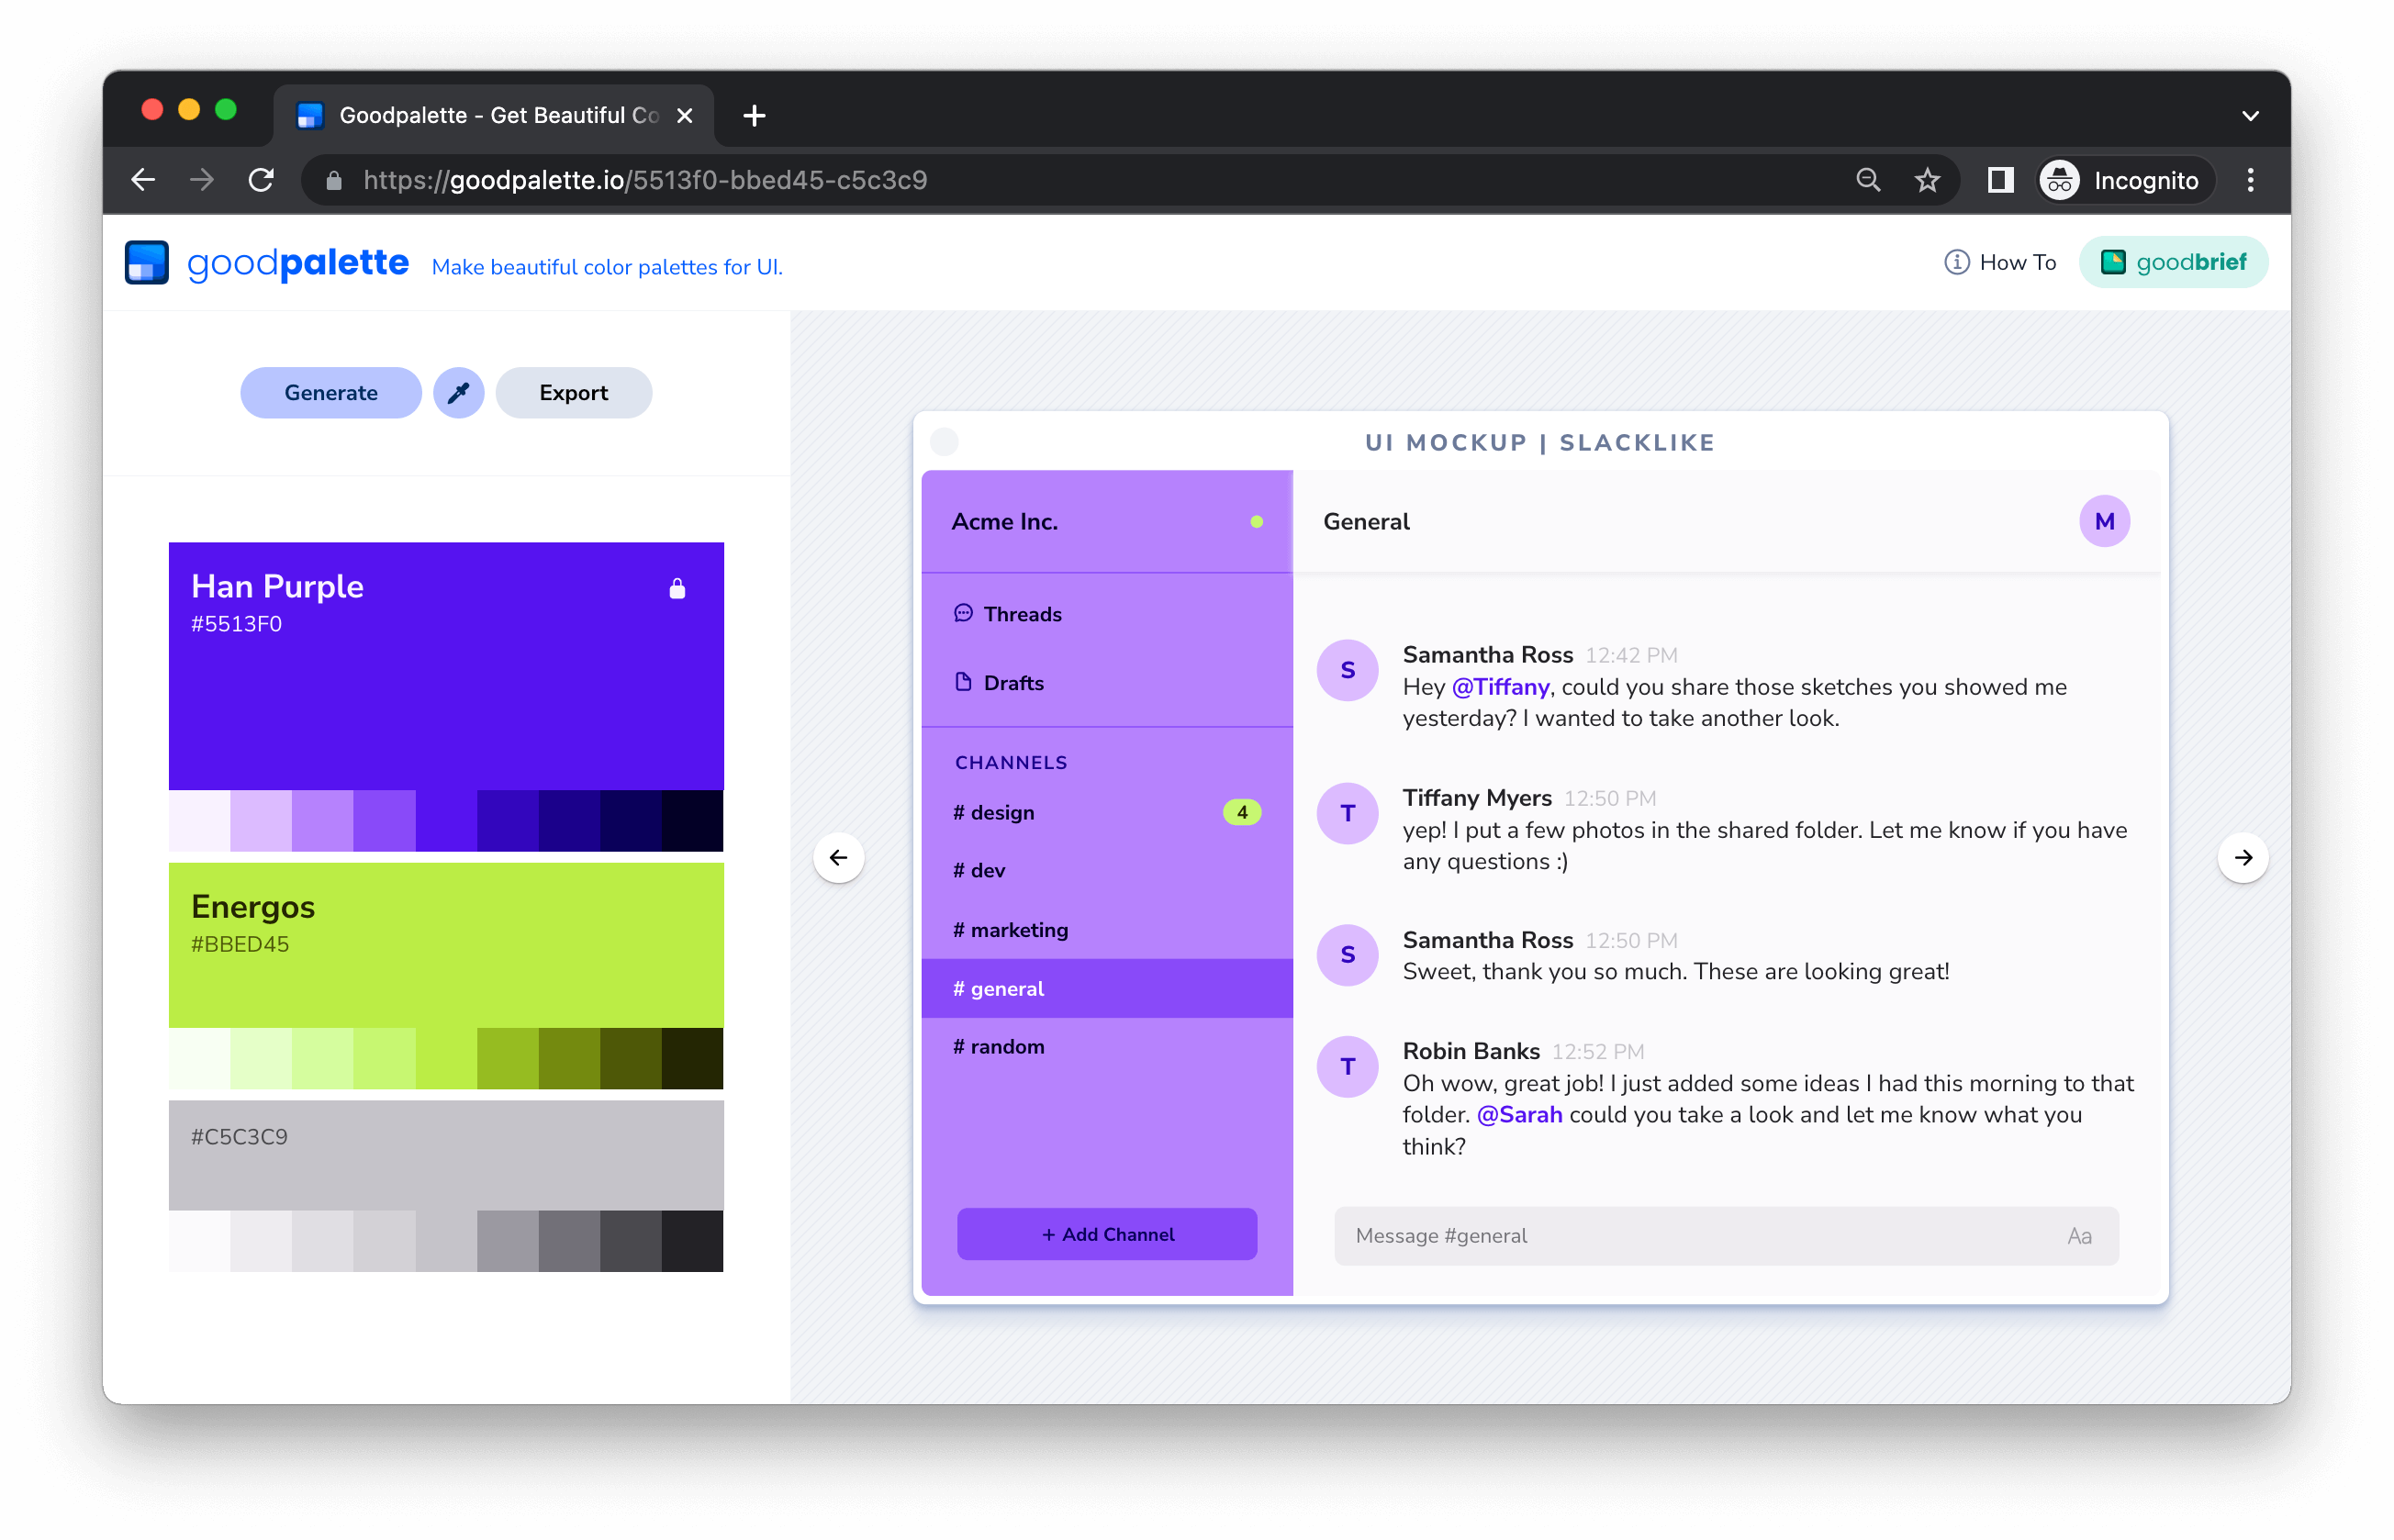 Goodpalette - Get Beautiful Color Palettes for UI Design